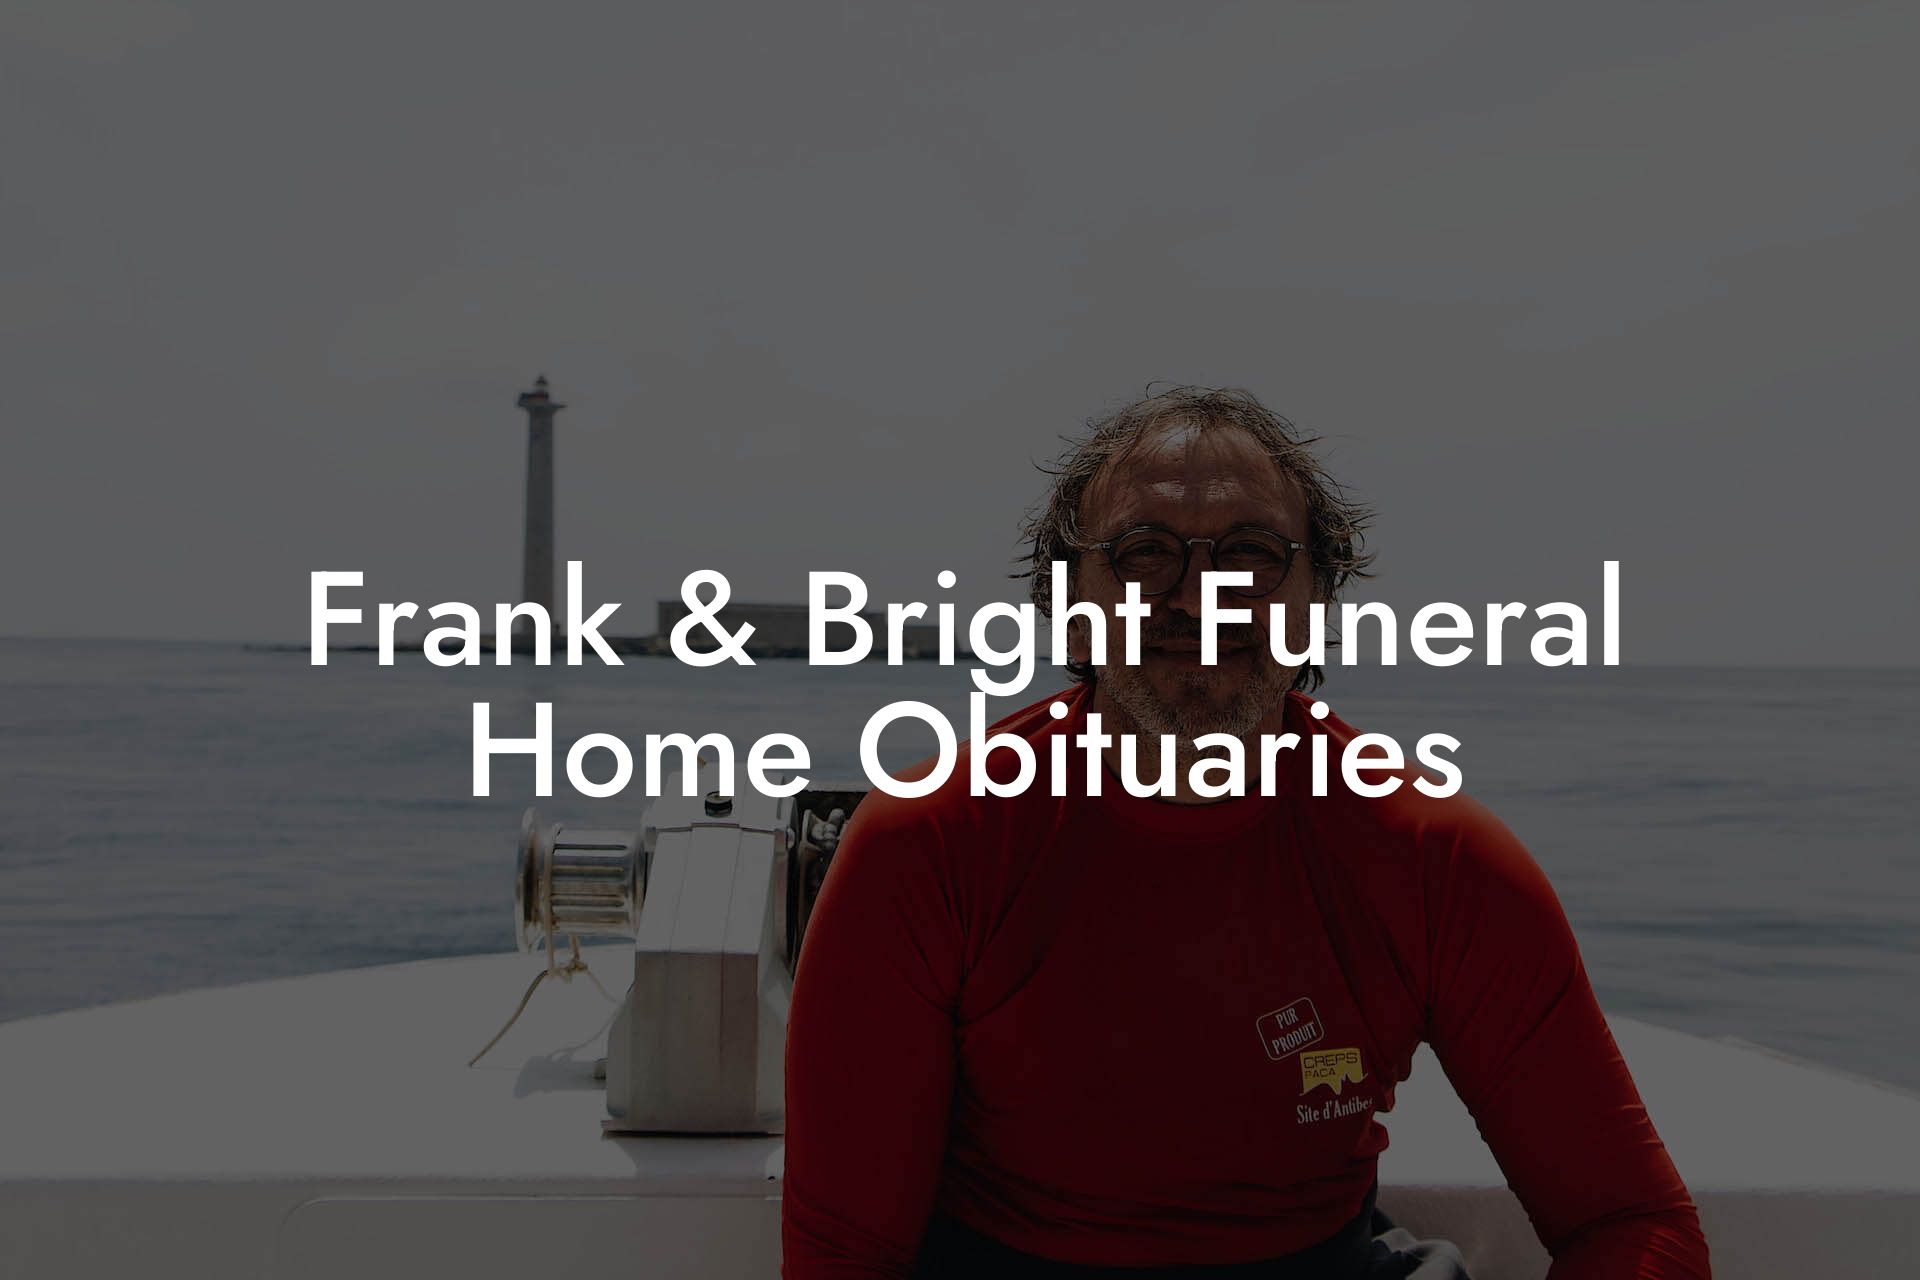 Frank & Bright Funeral Home Obituaries